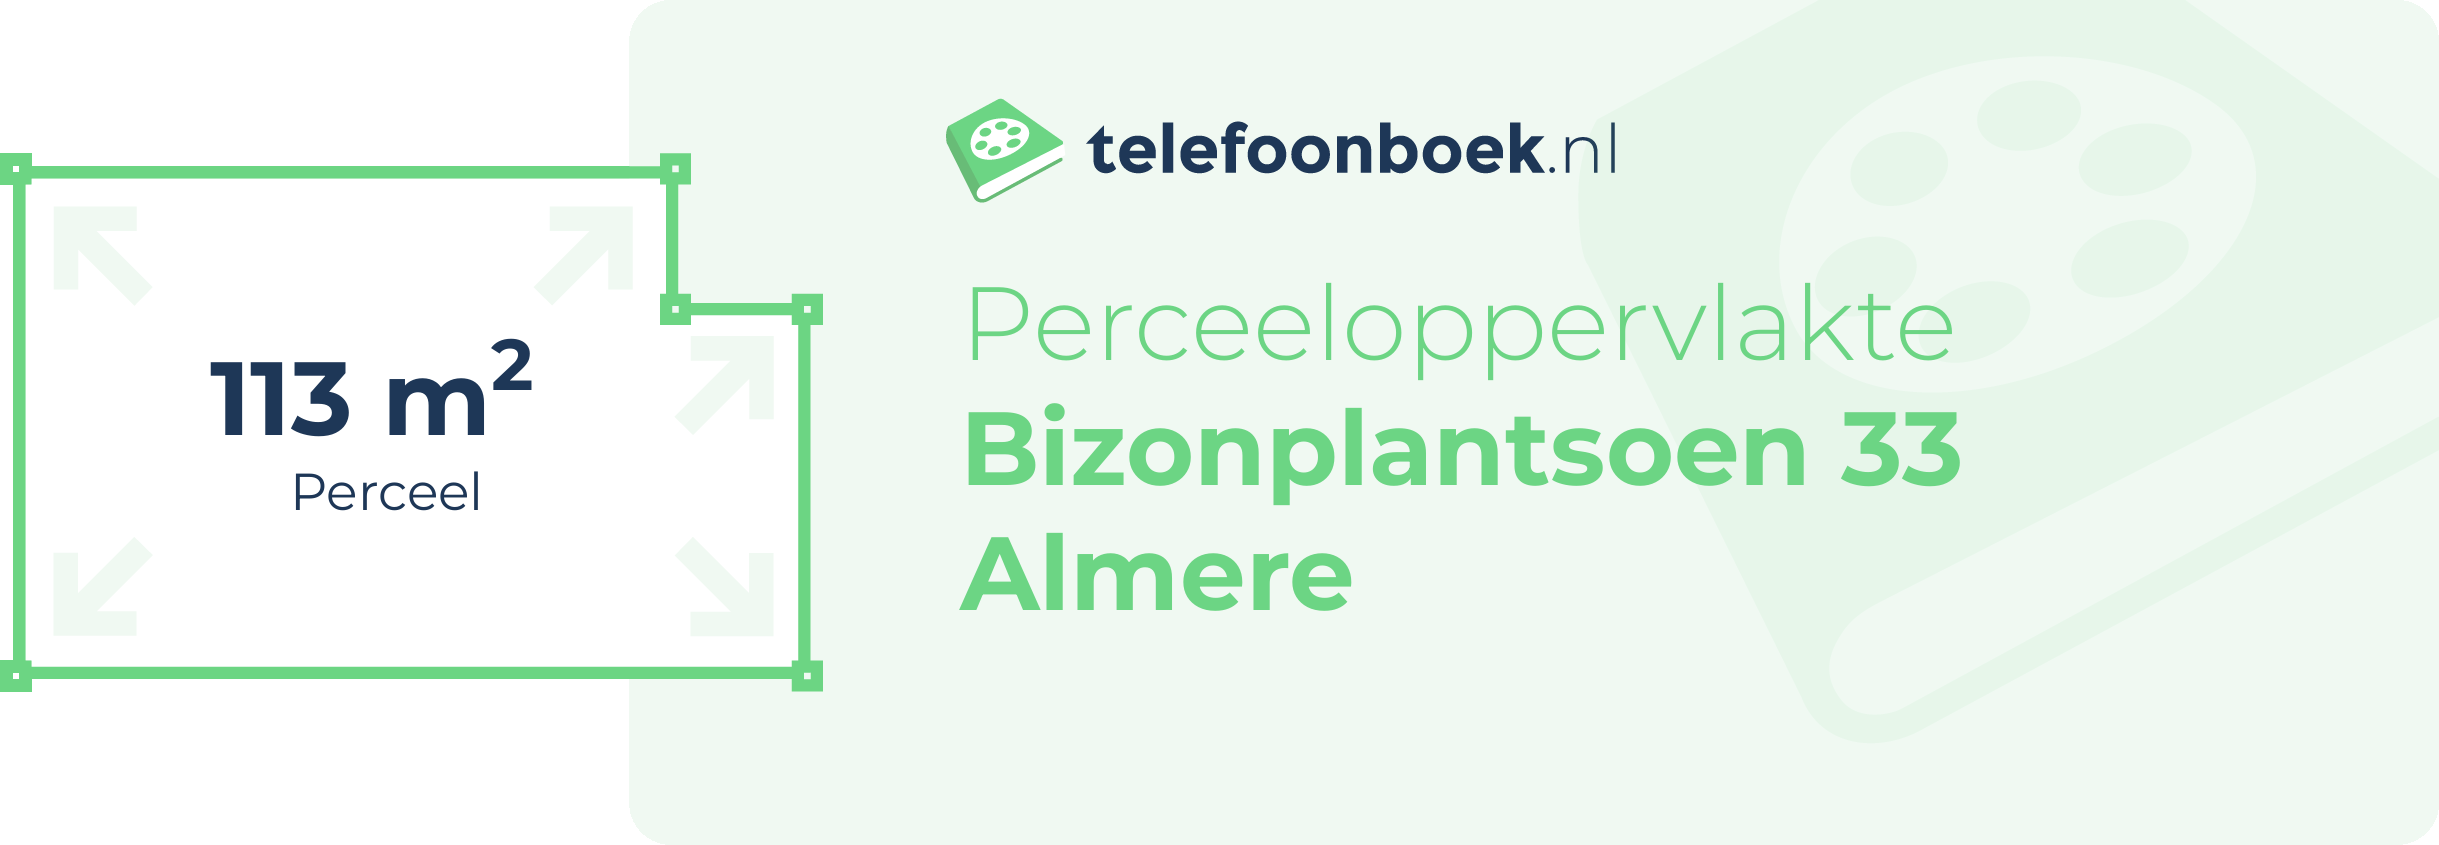 Perceeloppervlakte Bizonplantsoen 33 Almere